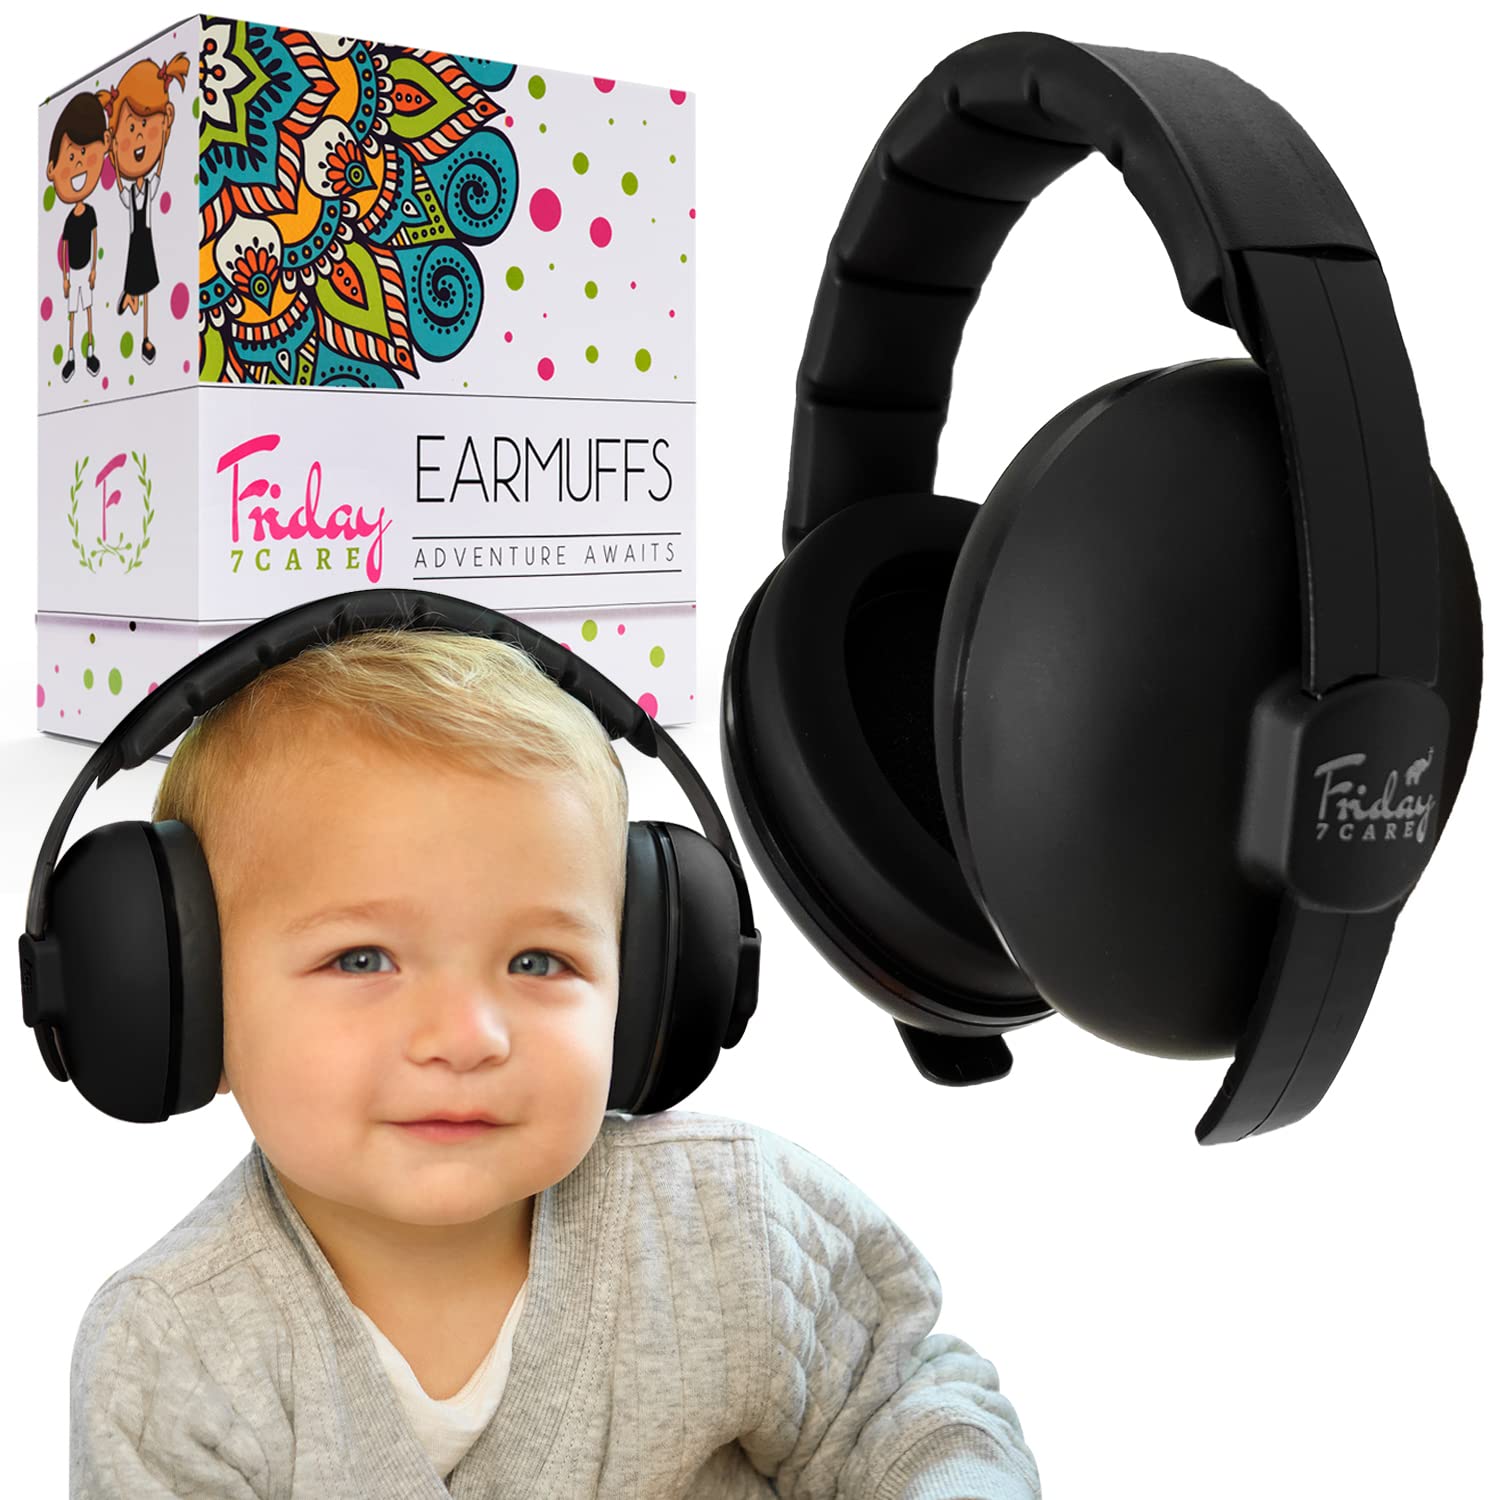 Friday 7Care Sensitive Lightweight Infant Ear Muff (For Noise)